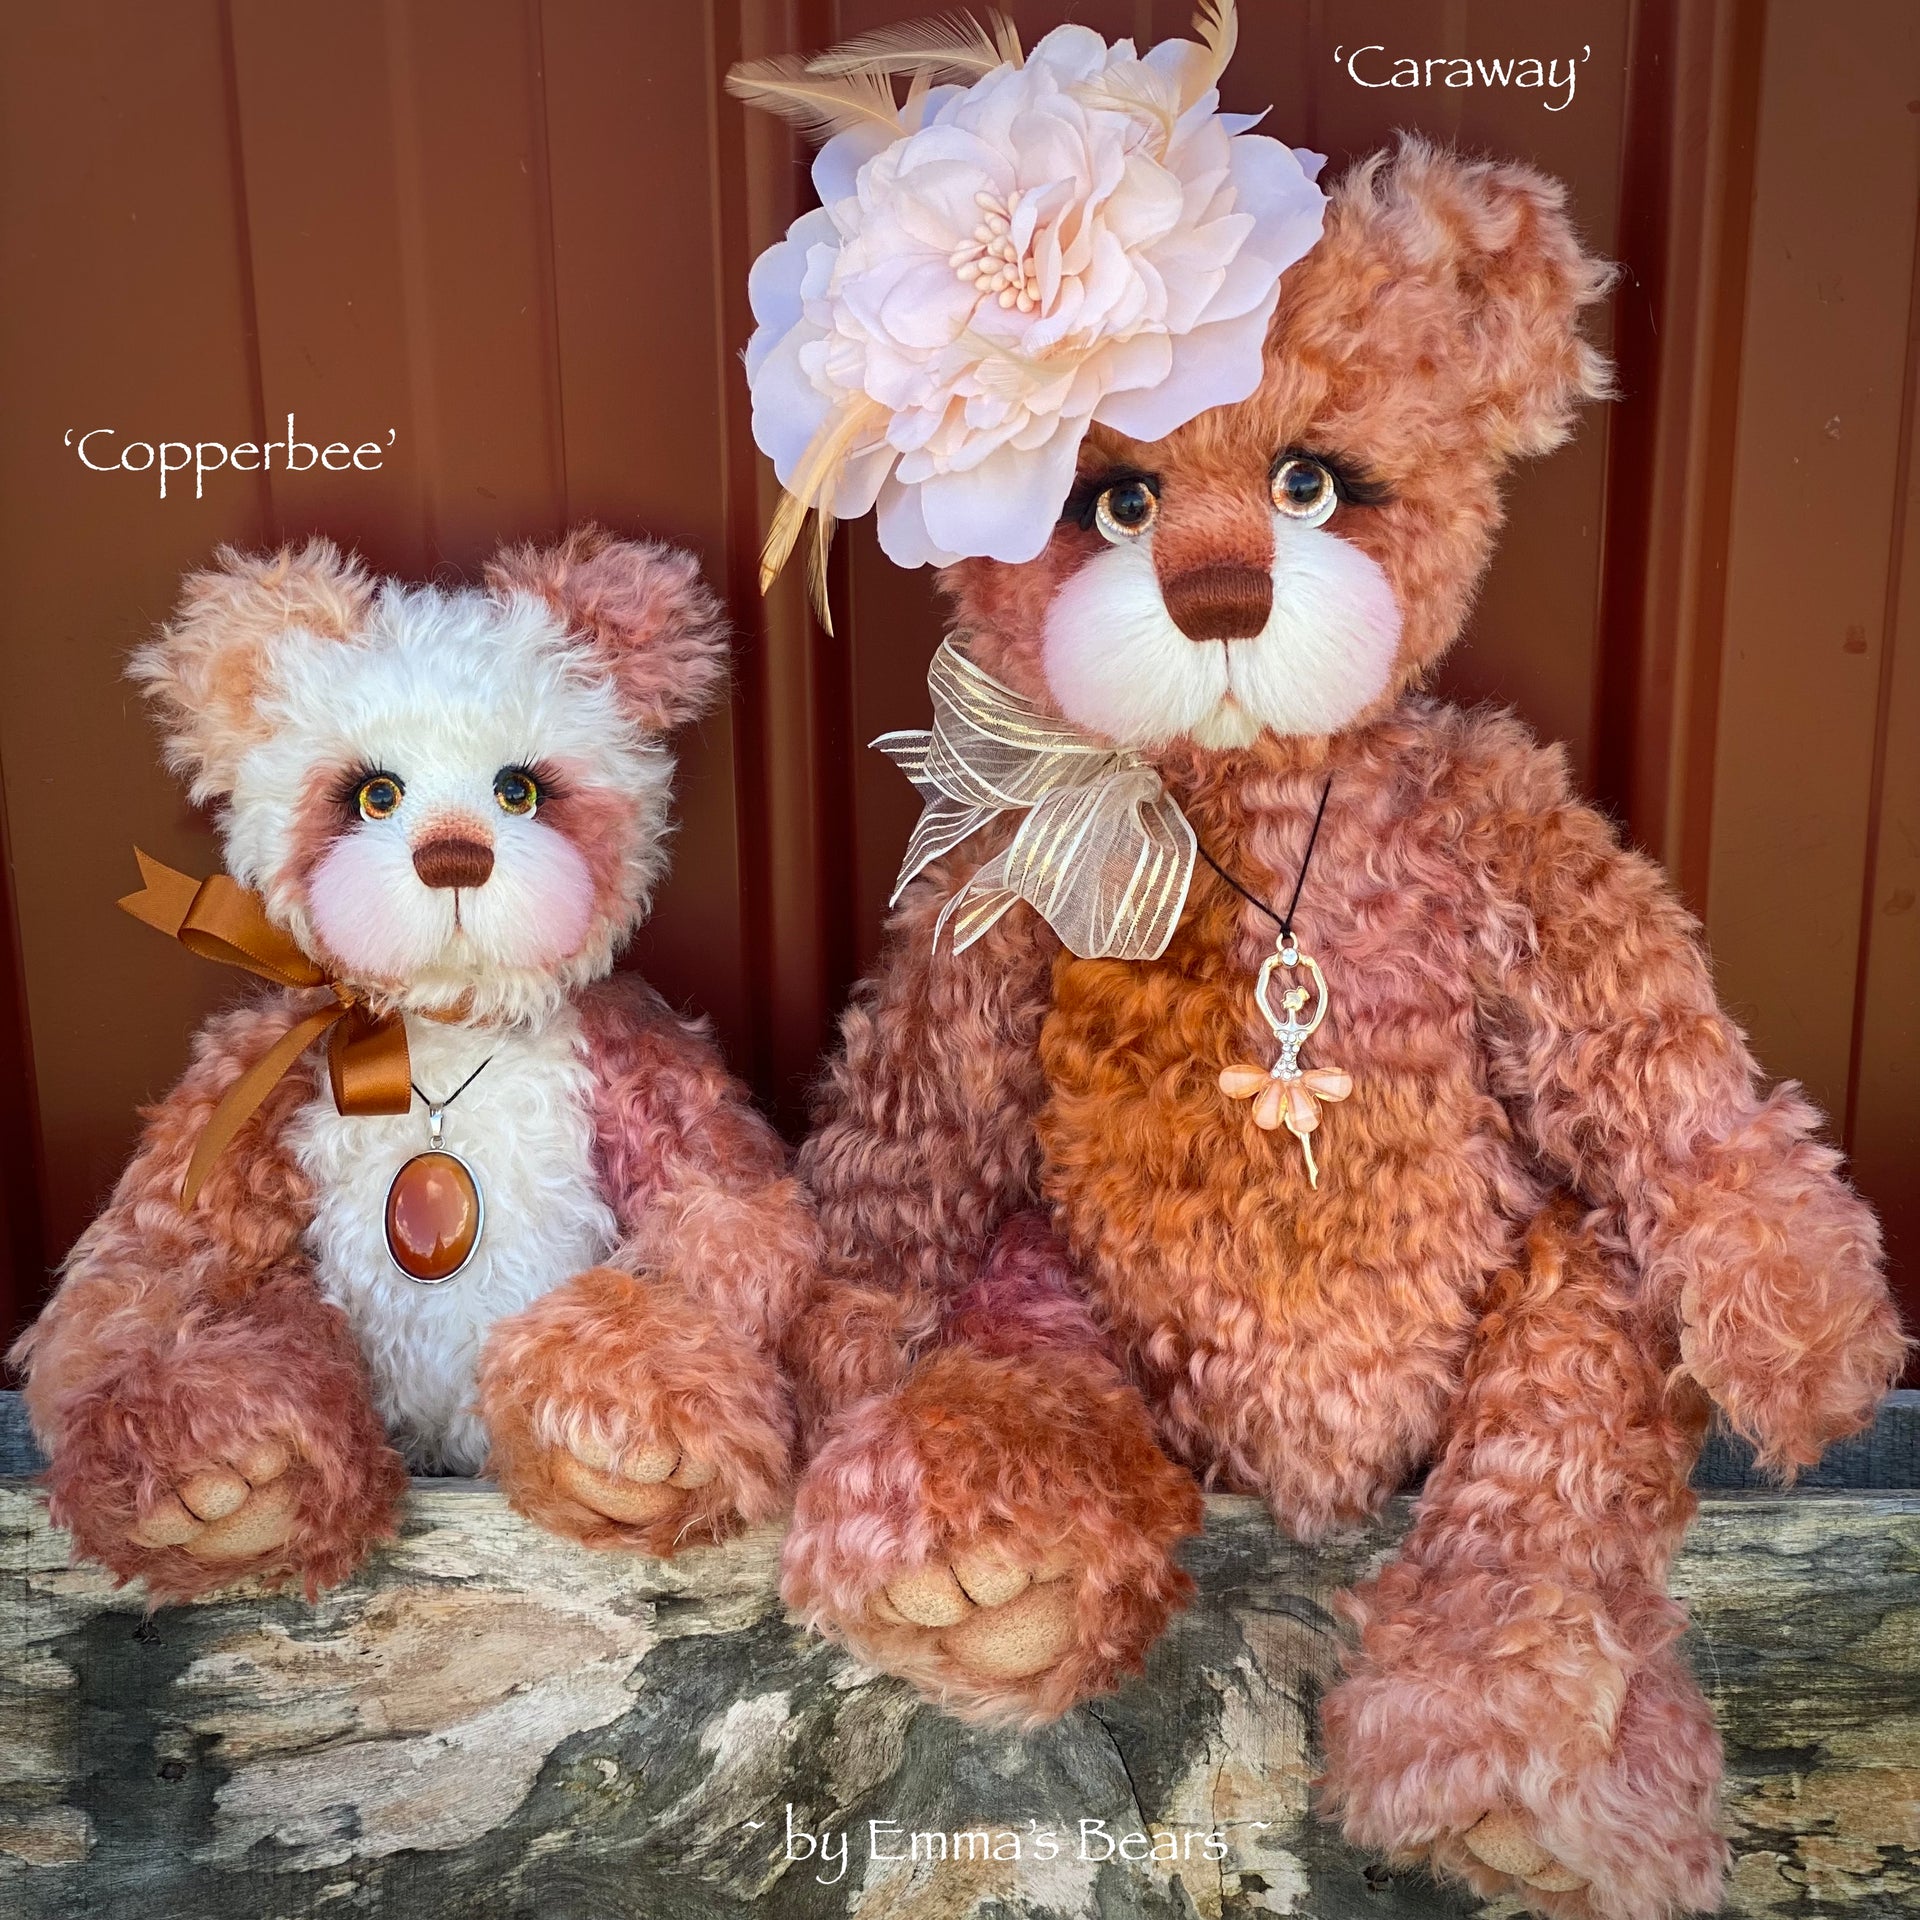 Copperbee - 12" Curly Kid Mohair and Alpaca artist bear by Emma's Bears - OOAK